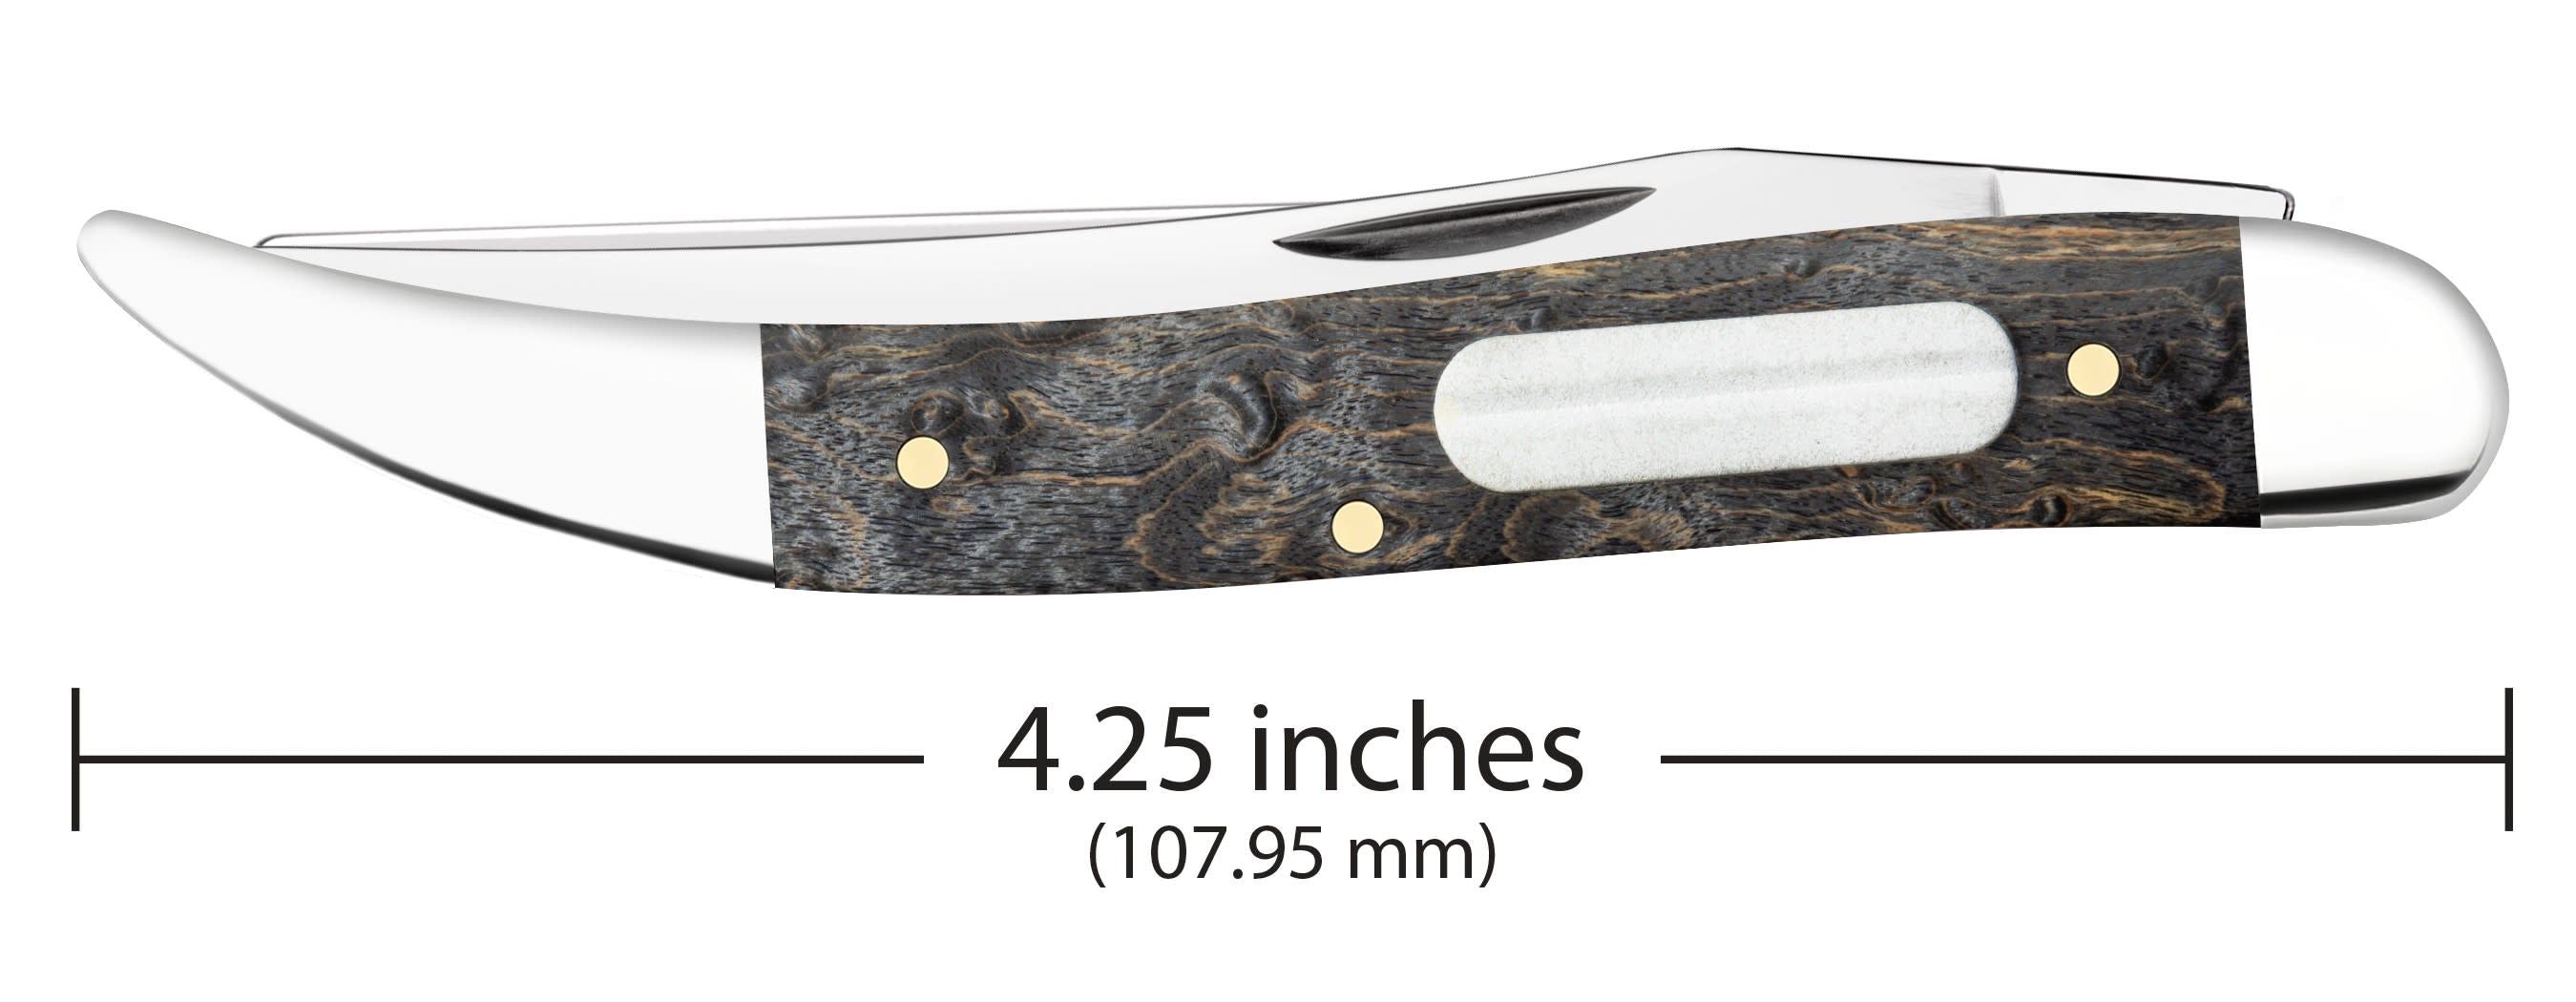 Smooth Gray Birdseye Maple Fishing Knife  Knife Dimensions